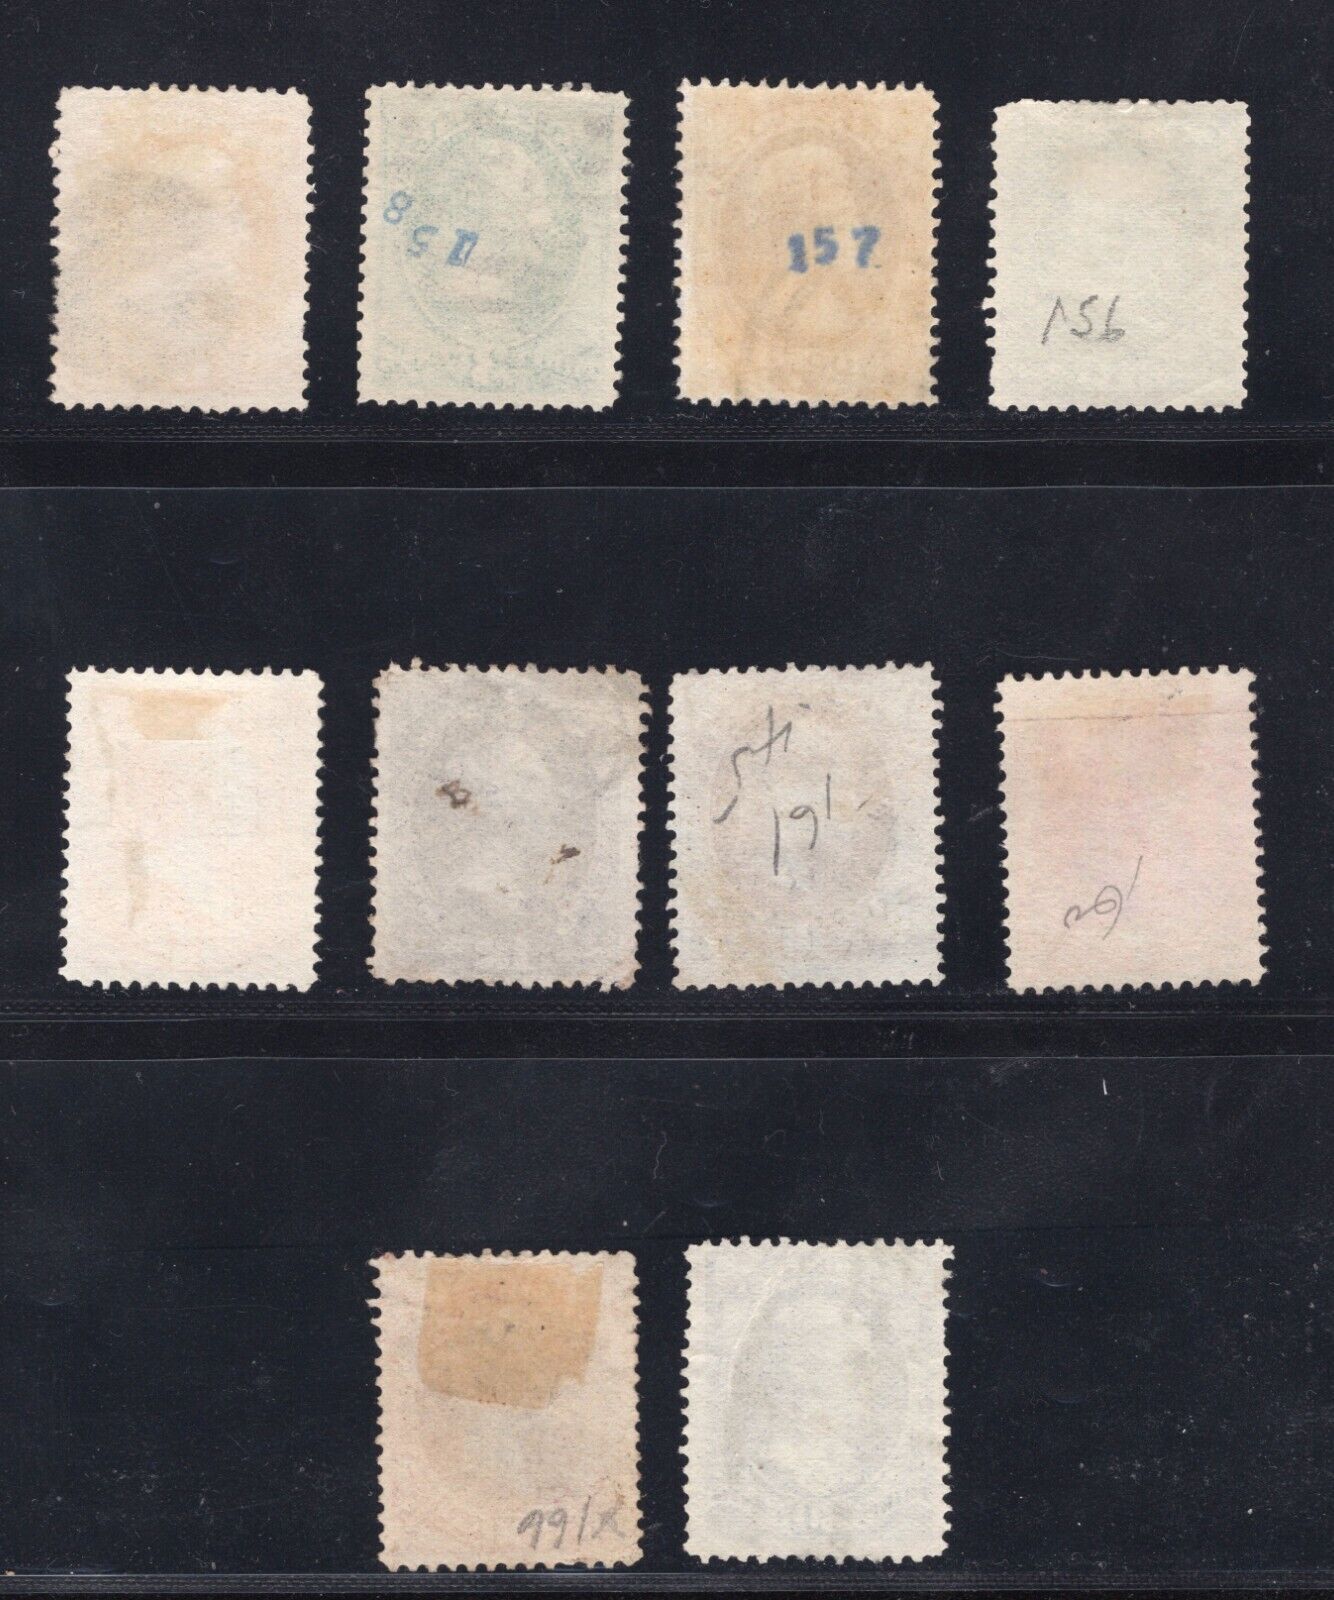 92 cents . Black Vintage Postage Stamp Variety Pack . Set of 5 Marketplace  Postage Stamps by undefined